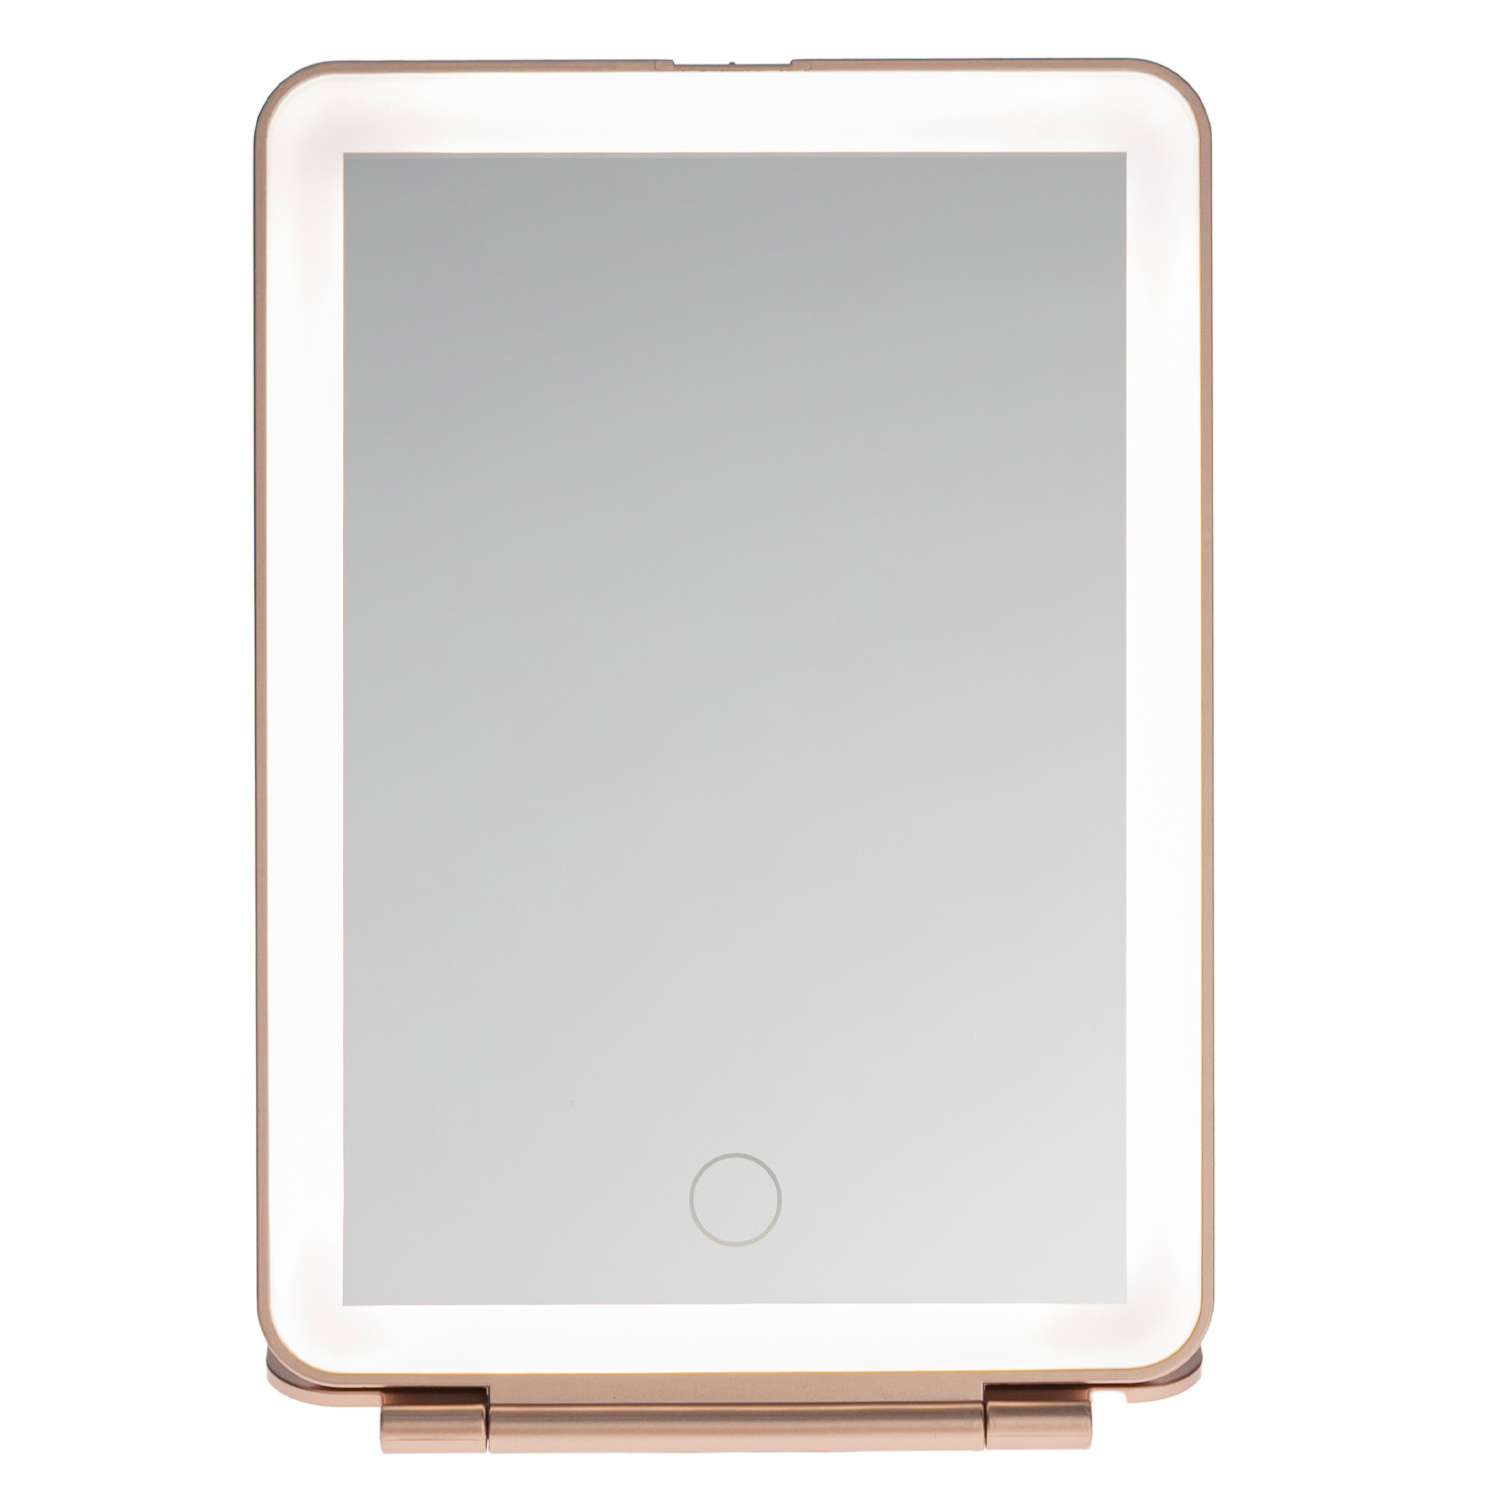 Зеркало косметическое CleverCare в форме планшета с LED подсветкой монохром цвет белый - фото 1